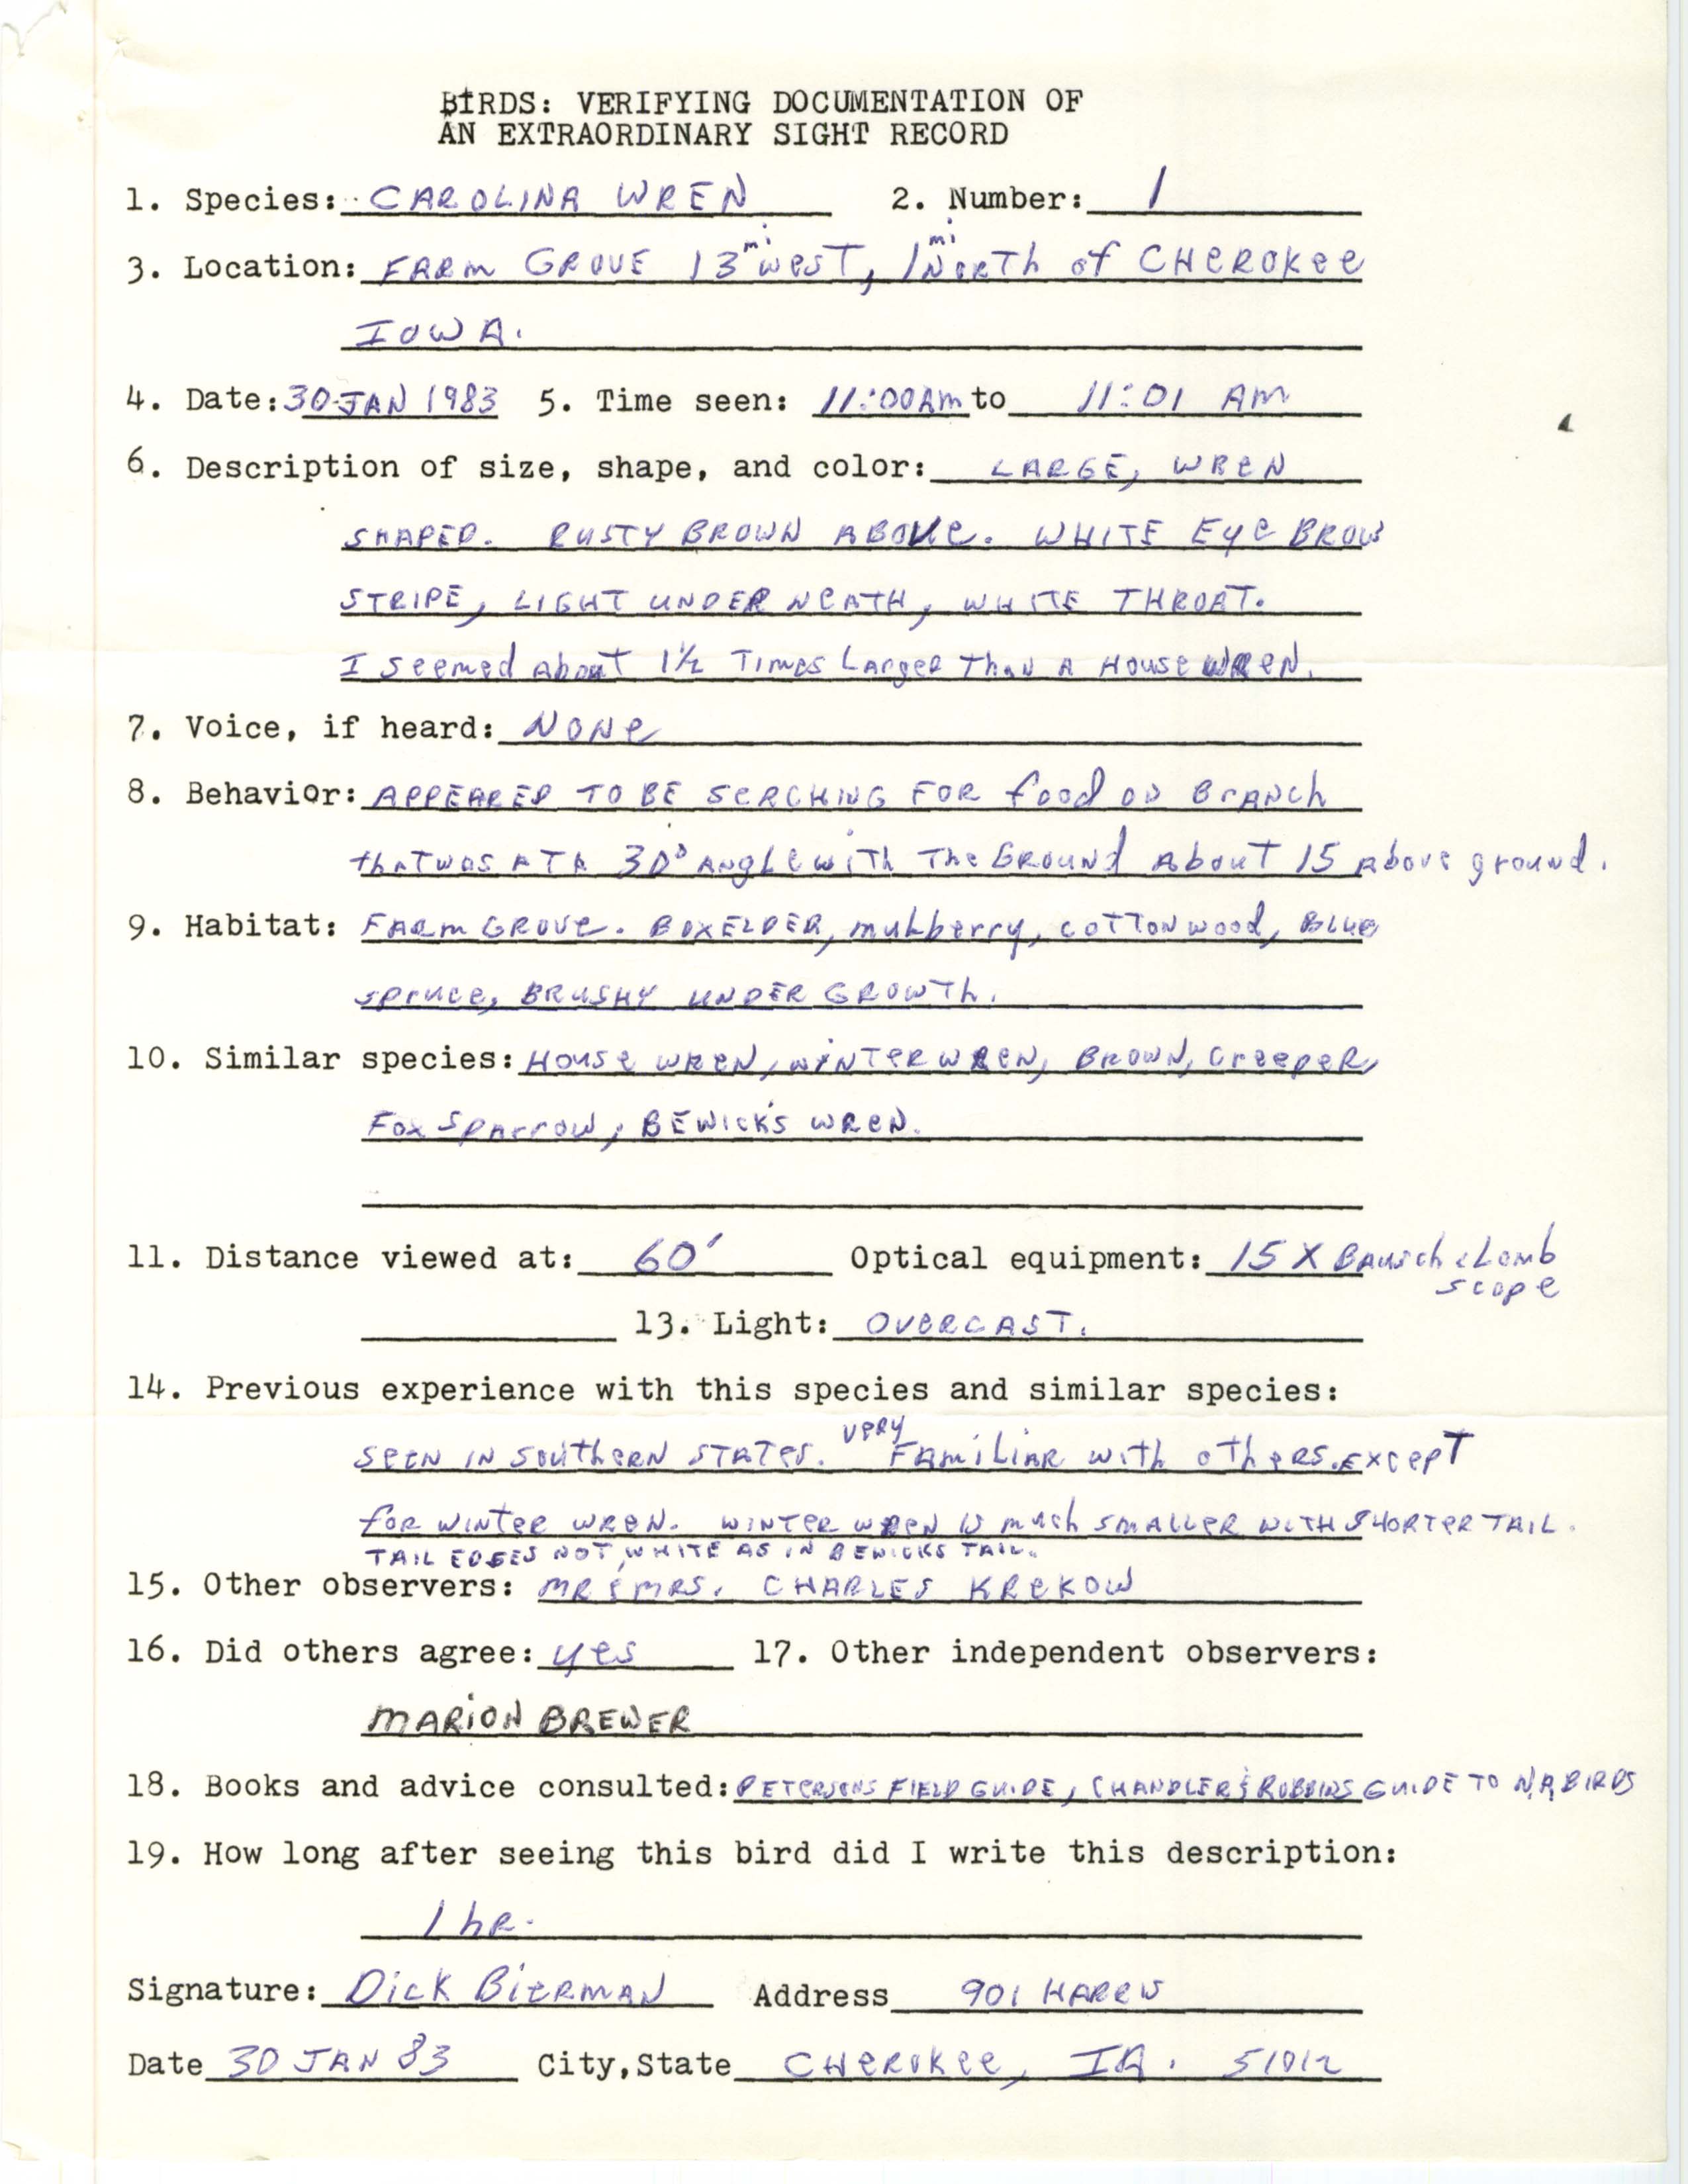 Rare bird documentation form for Carolina Wren in Cherokee County, 1983